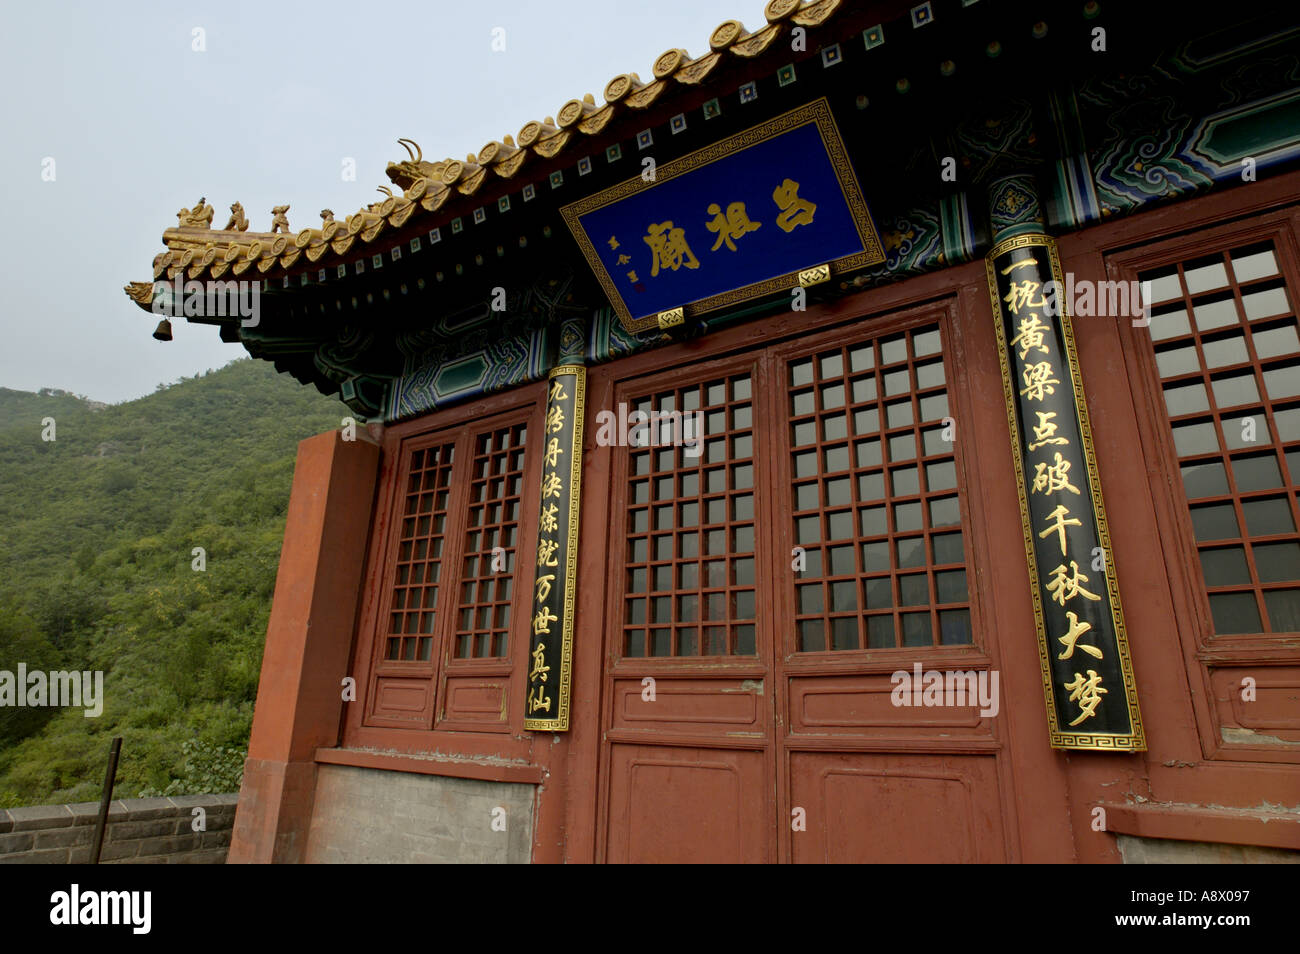 Entrance to a pavilion on the Great Wall at Juyongguan Gate, near Badaling, Beijing, China. Stock Photo